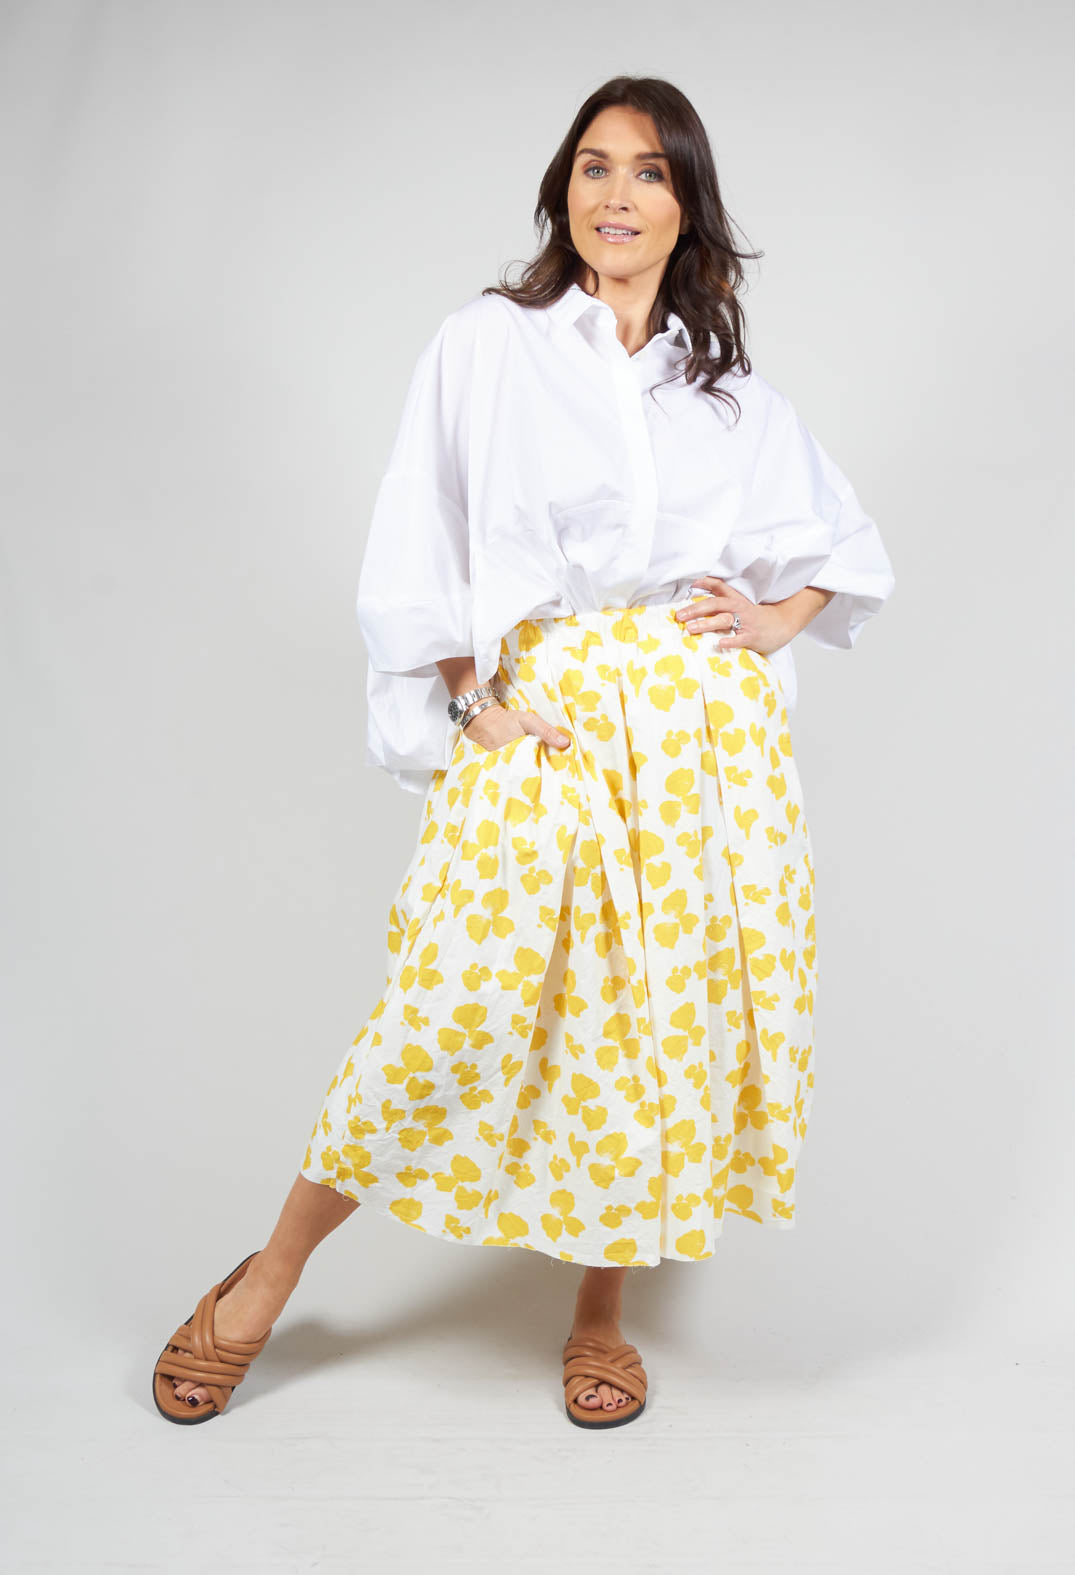 Printed Jenna Skirt in Yellow Flowers